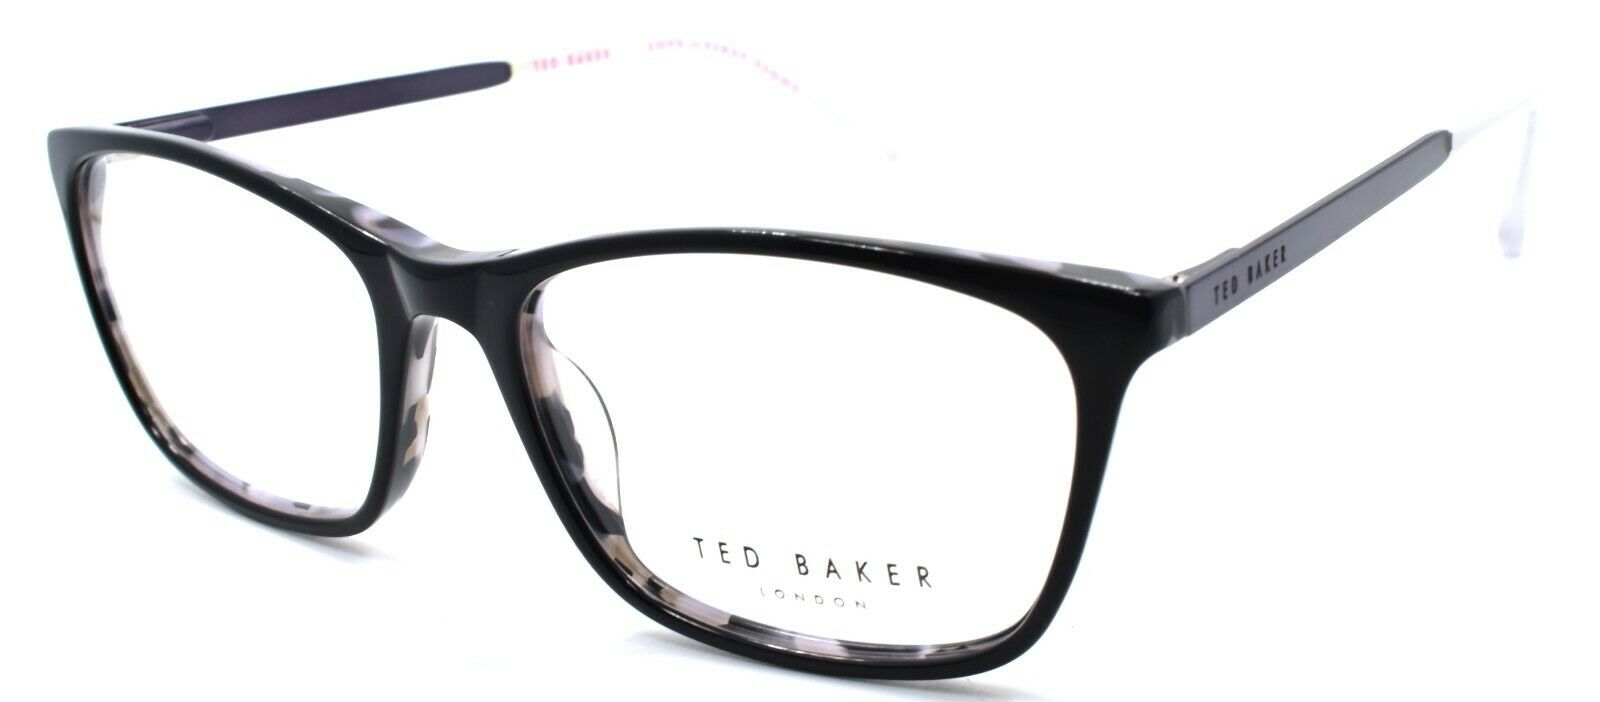 1-Ted Baker Persy 9097 001 Women's Eyeglasses Frames 52-16-140 Black / Marble-4894327097883-IKSpecs